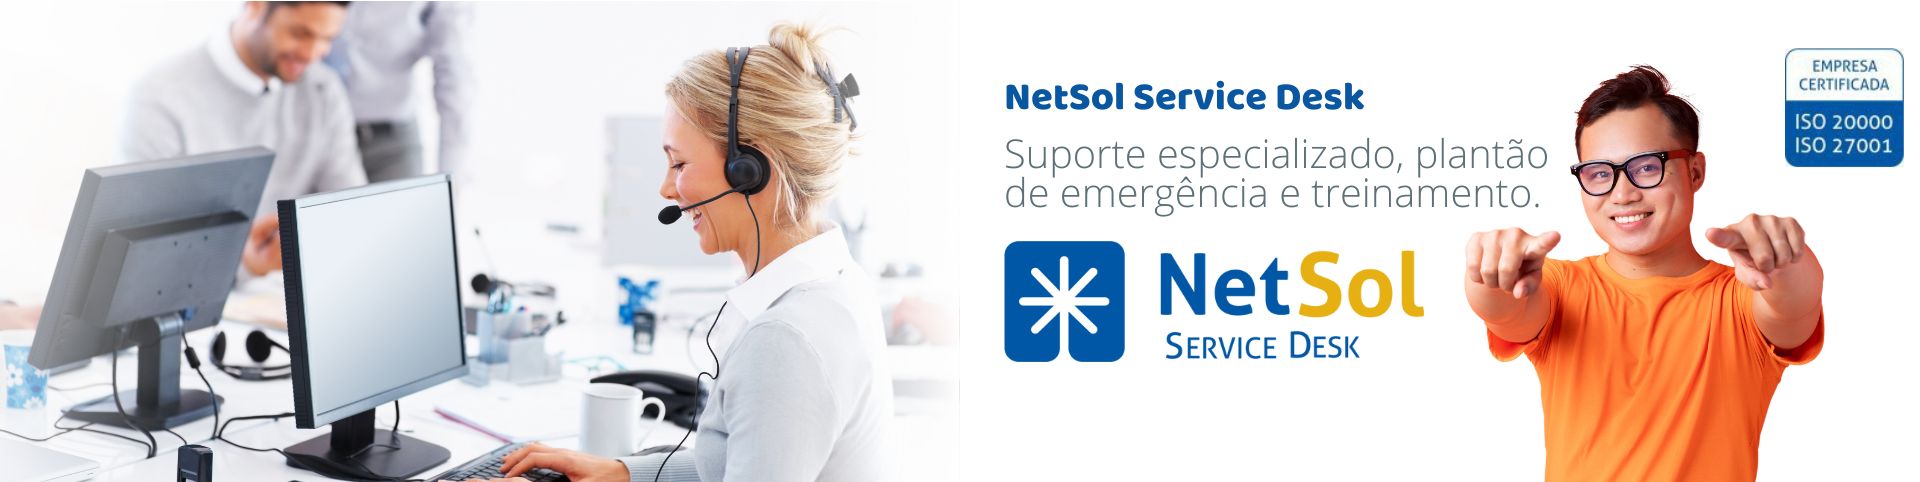 NetSol_Service_Desk